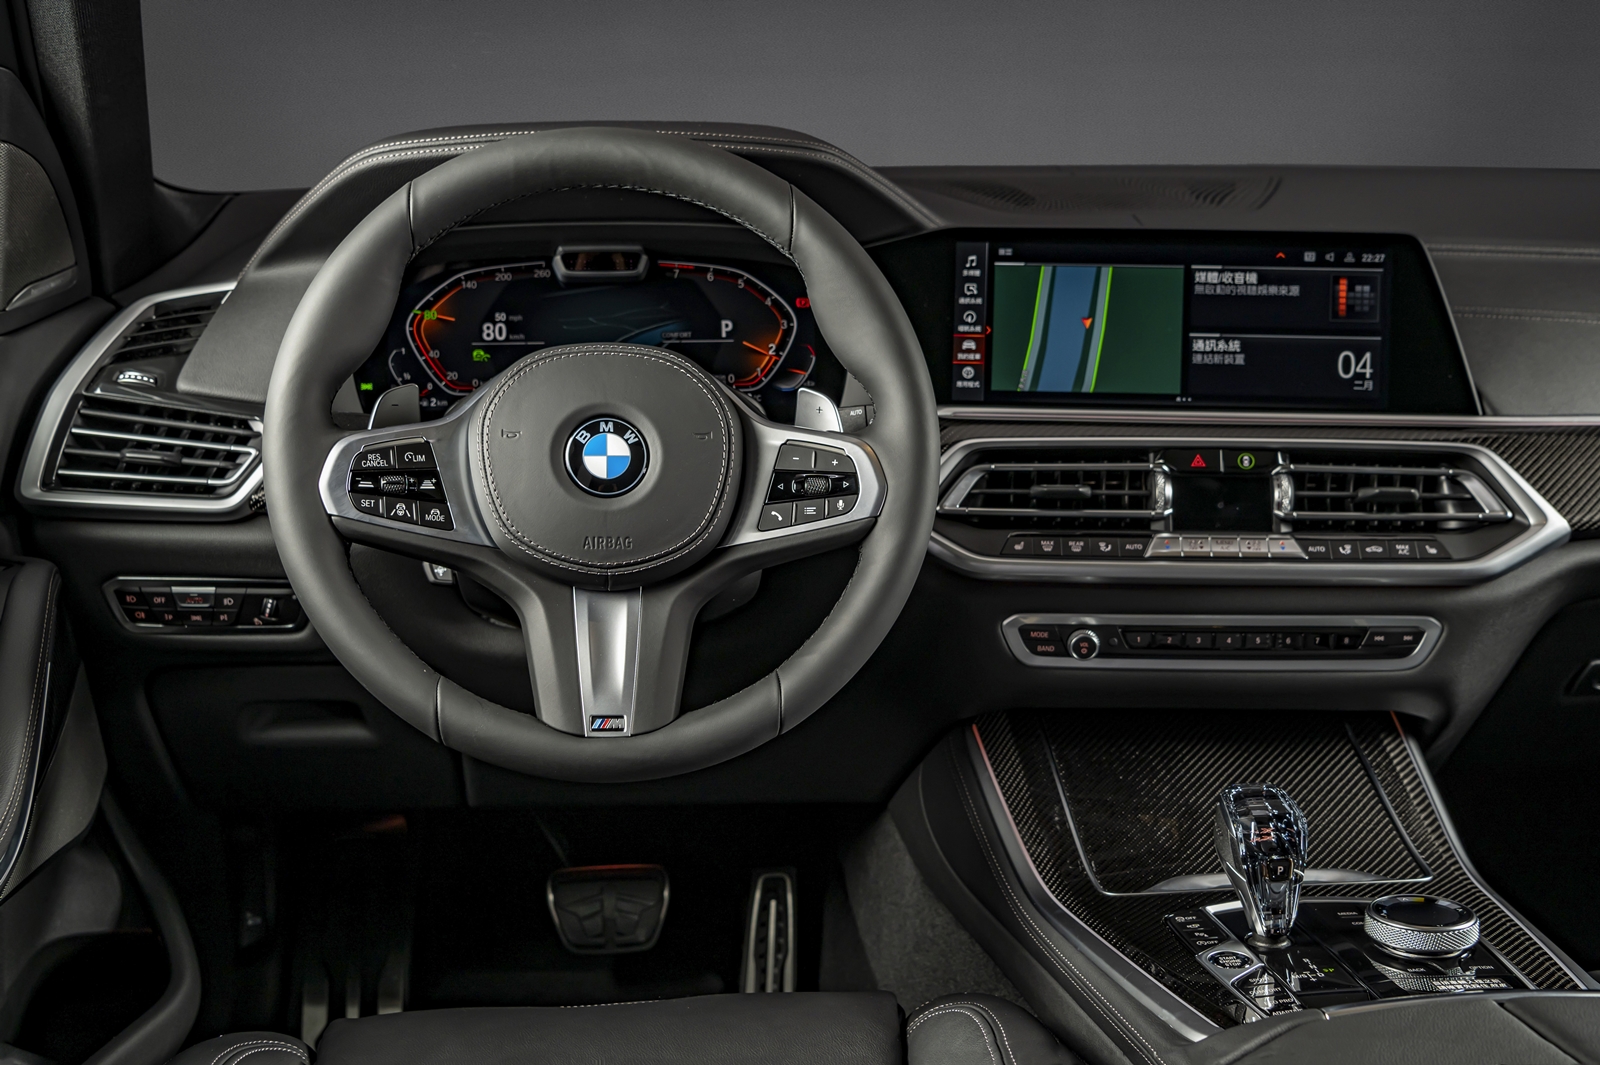 BMW X5 Dark Knight曜黑版標配全數位虛擬座艙、iDrive 7.0 操作介面、全新智慧語音助理2.0、iPhone手機數位鑰匙、無線智慧型手機整合系統、M款多功能真皮方向盤與專屬碳纖維飾板。